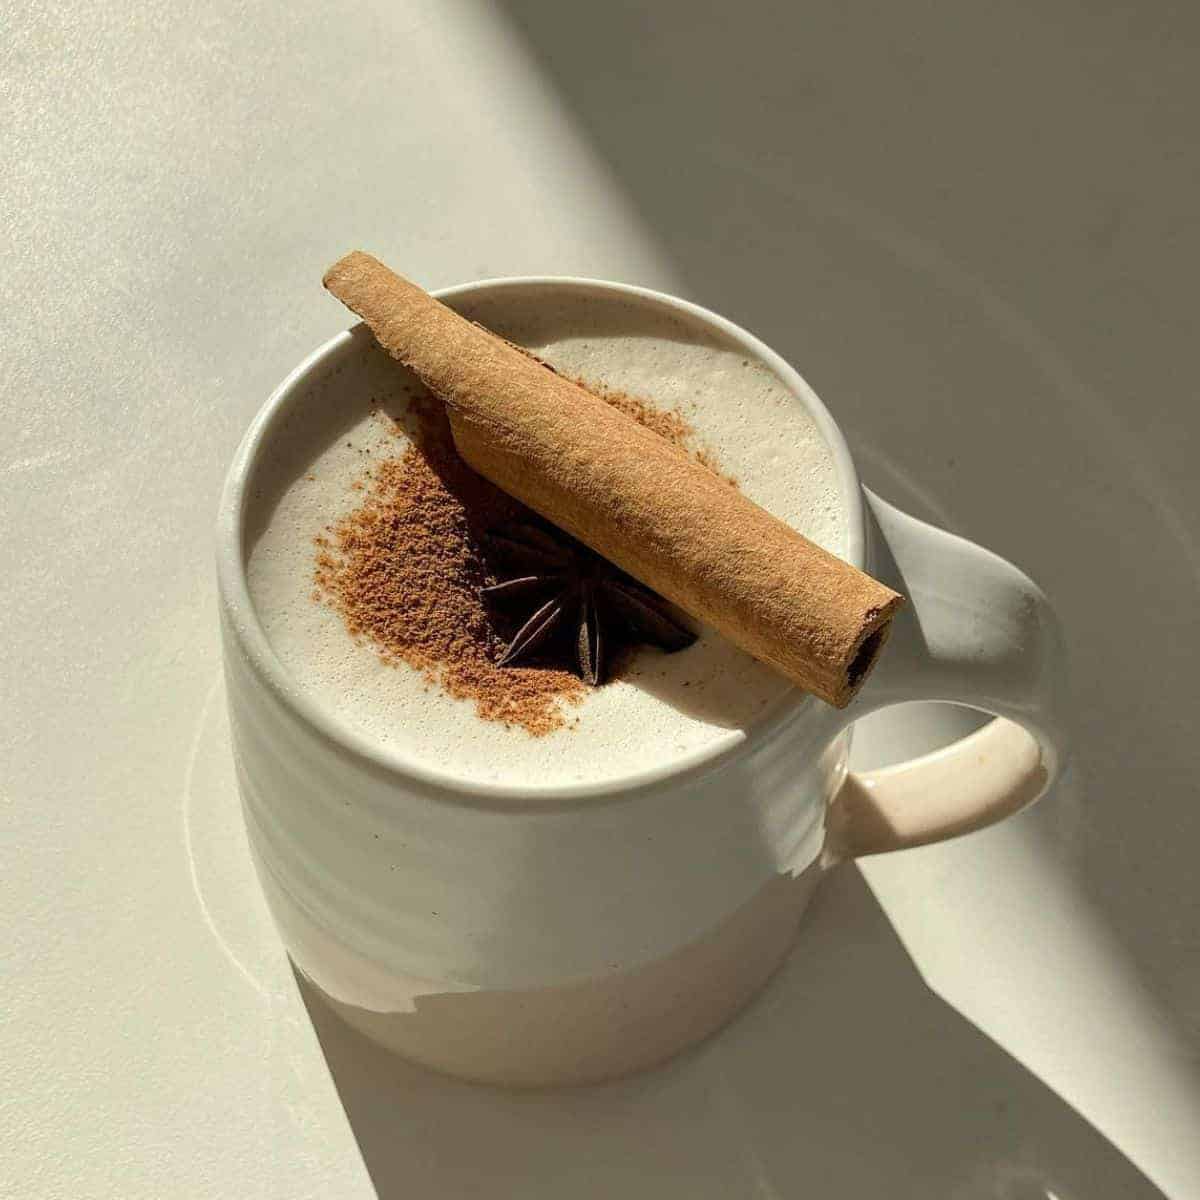 vanilla chai latte by Coloured Bean cafe